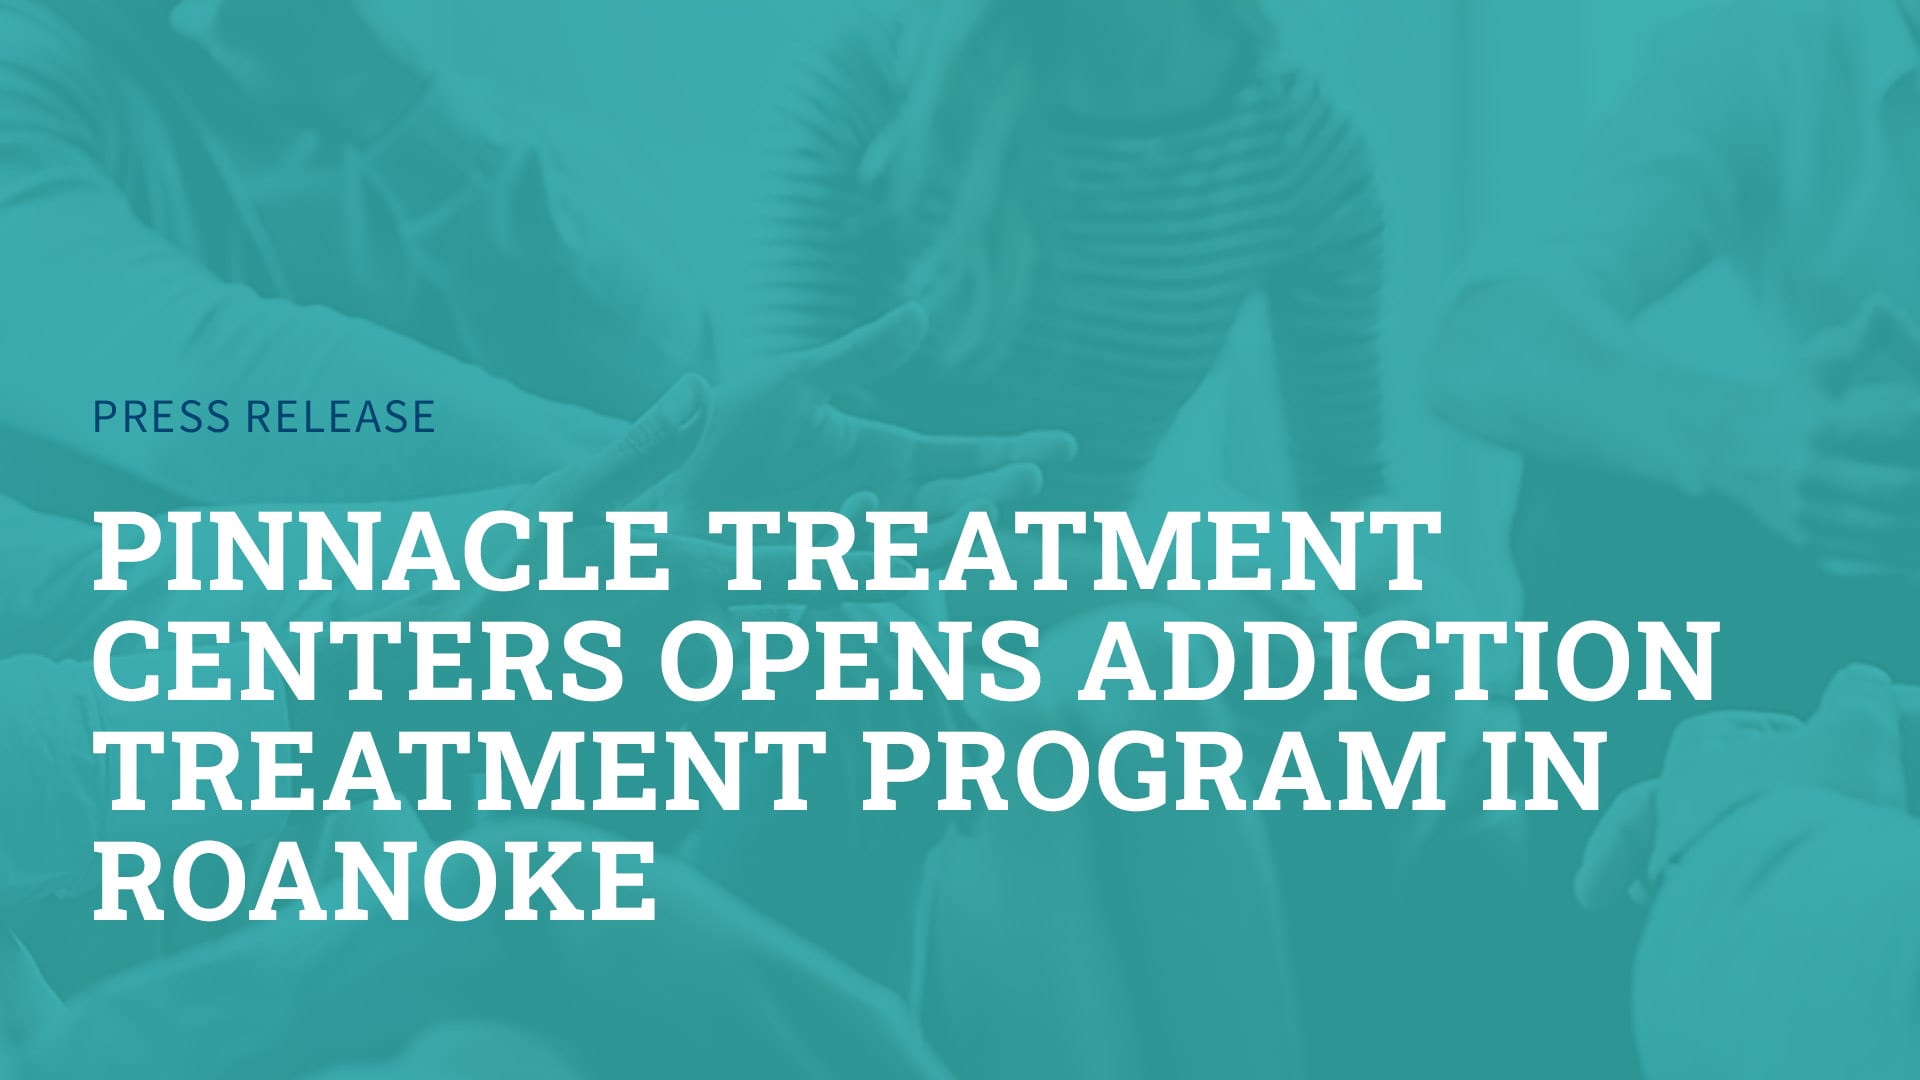 Pinnacle Treatment Centers Opens Addiction Treatment Program in Roanoke